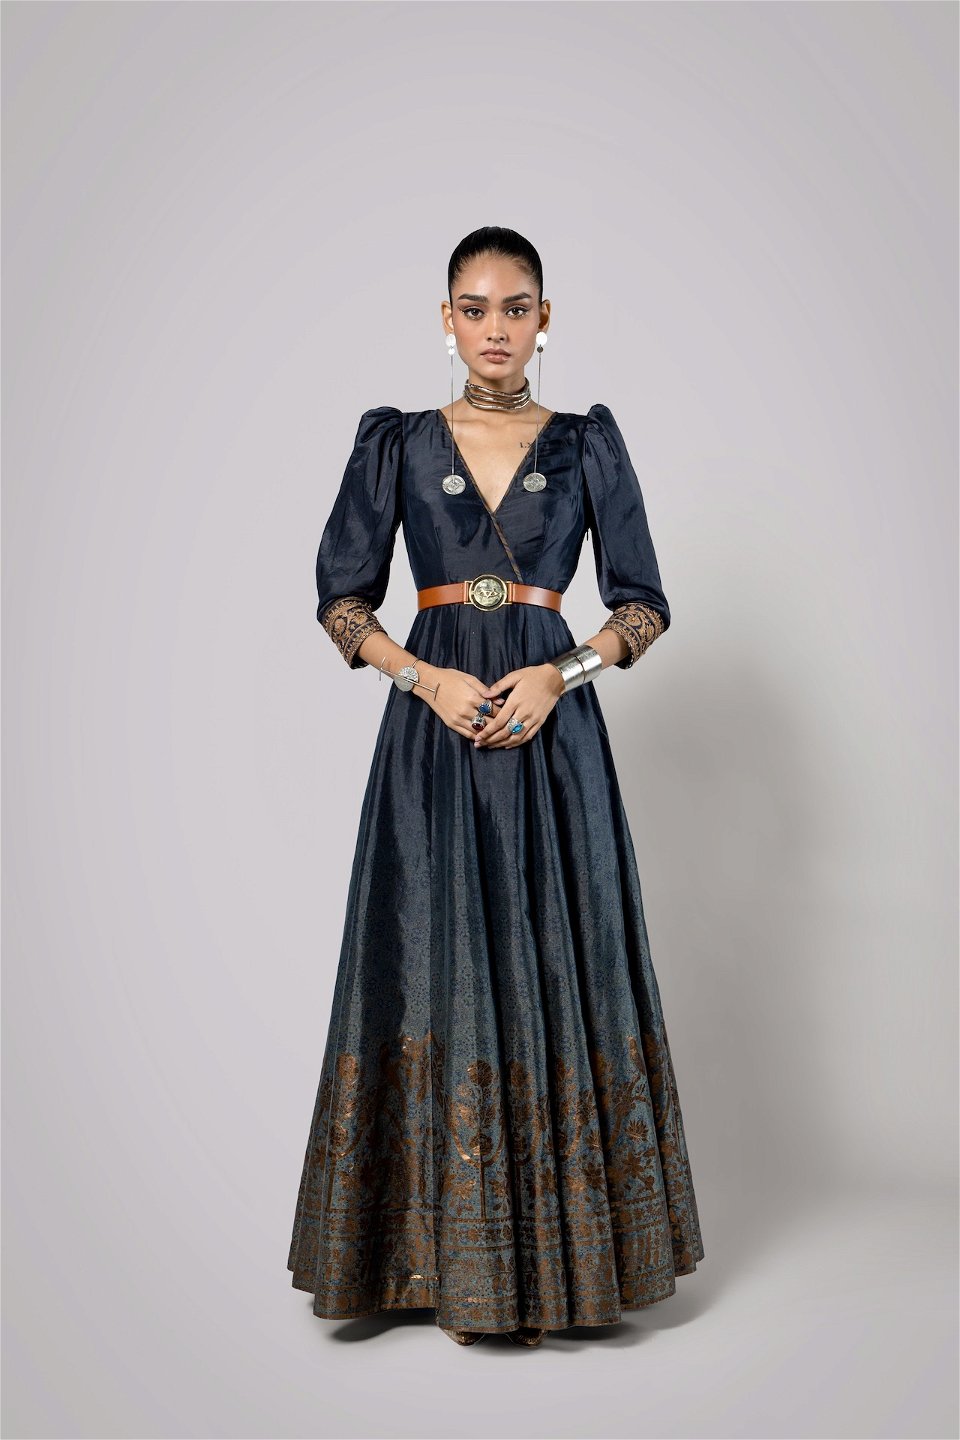 tabrez Indi Girls Maxi/Full Length Festive/Wedding Dress Price in India -  Buy tabrez Indi Girls Maxi/Full Length Festive/Wedding Dress online at